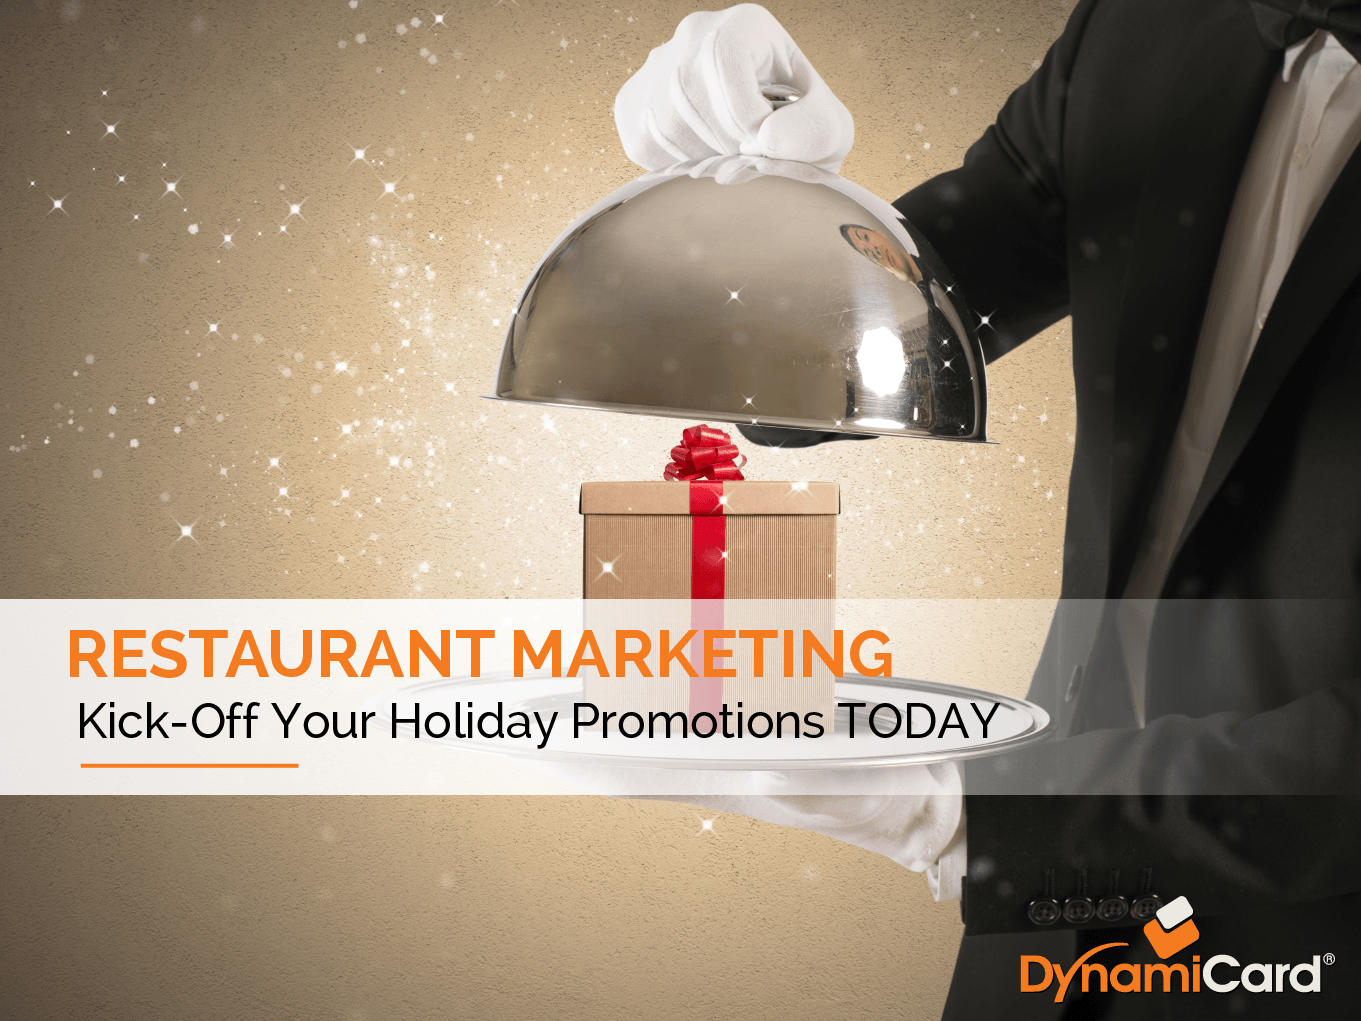 Restaurant Holiday Marketing